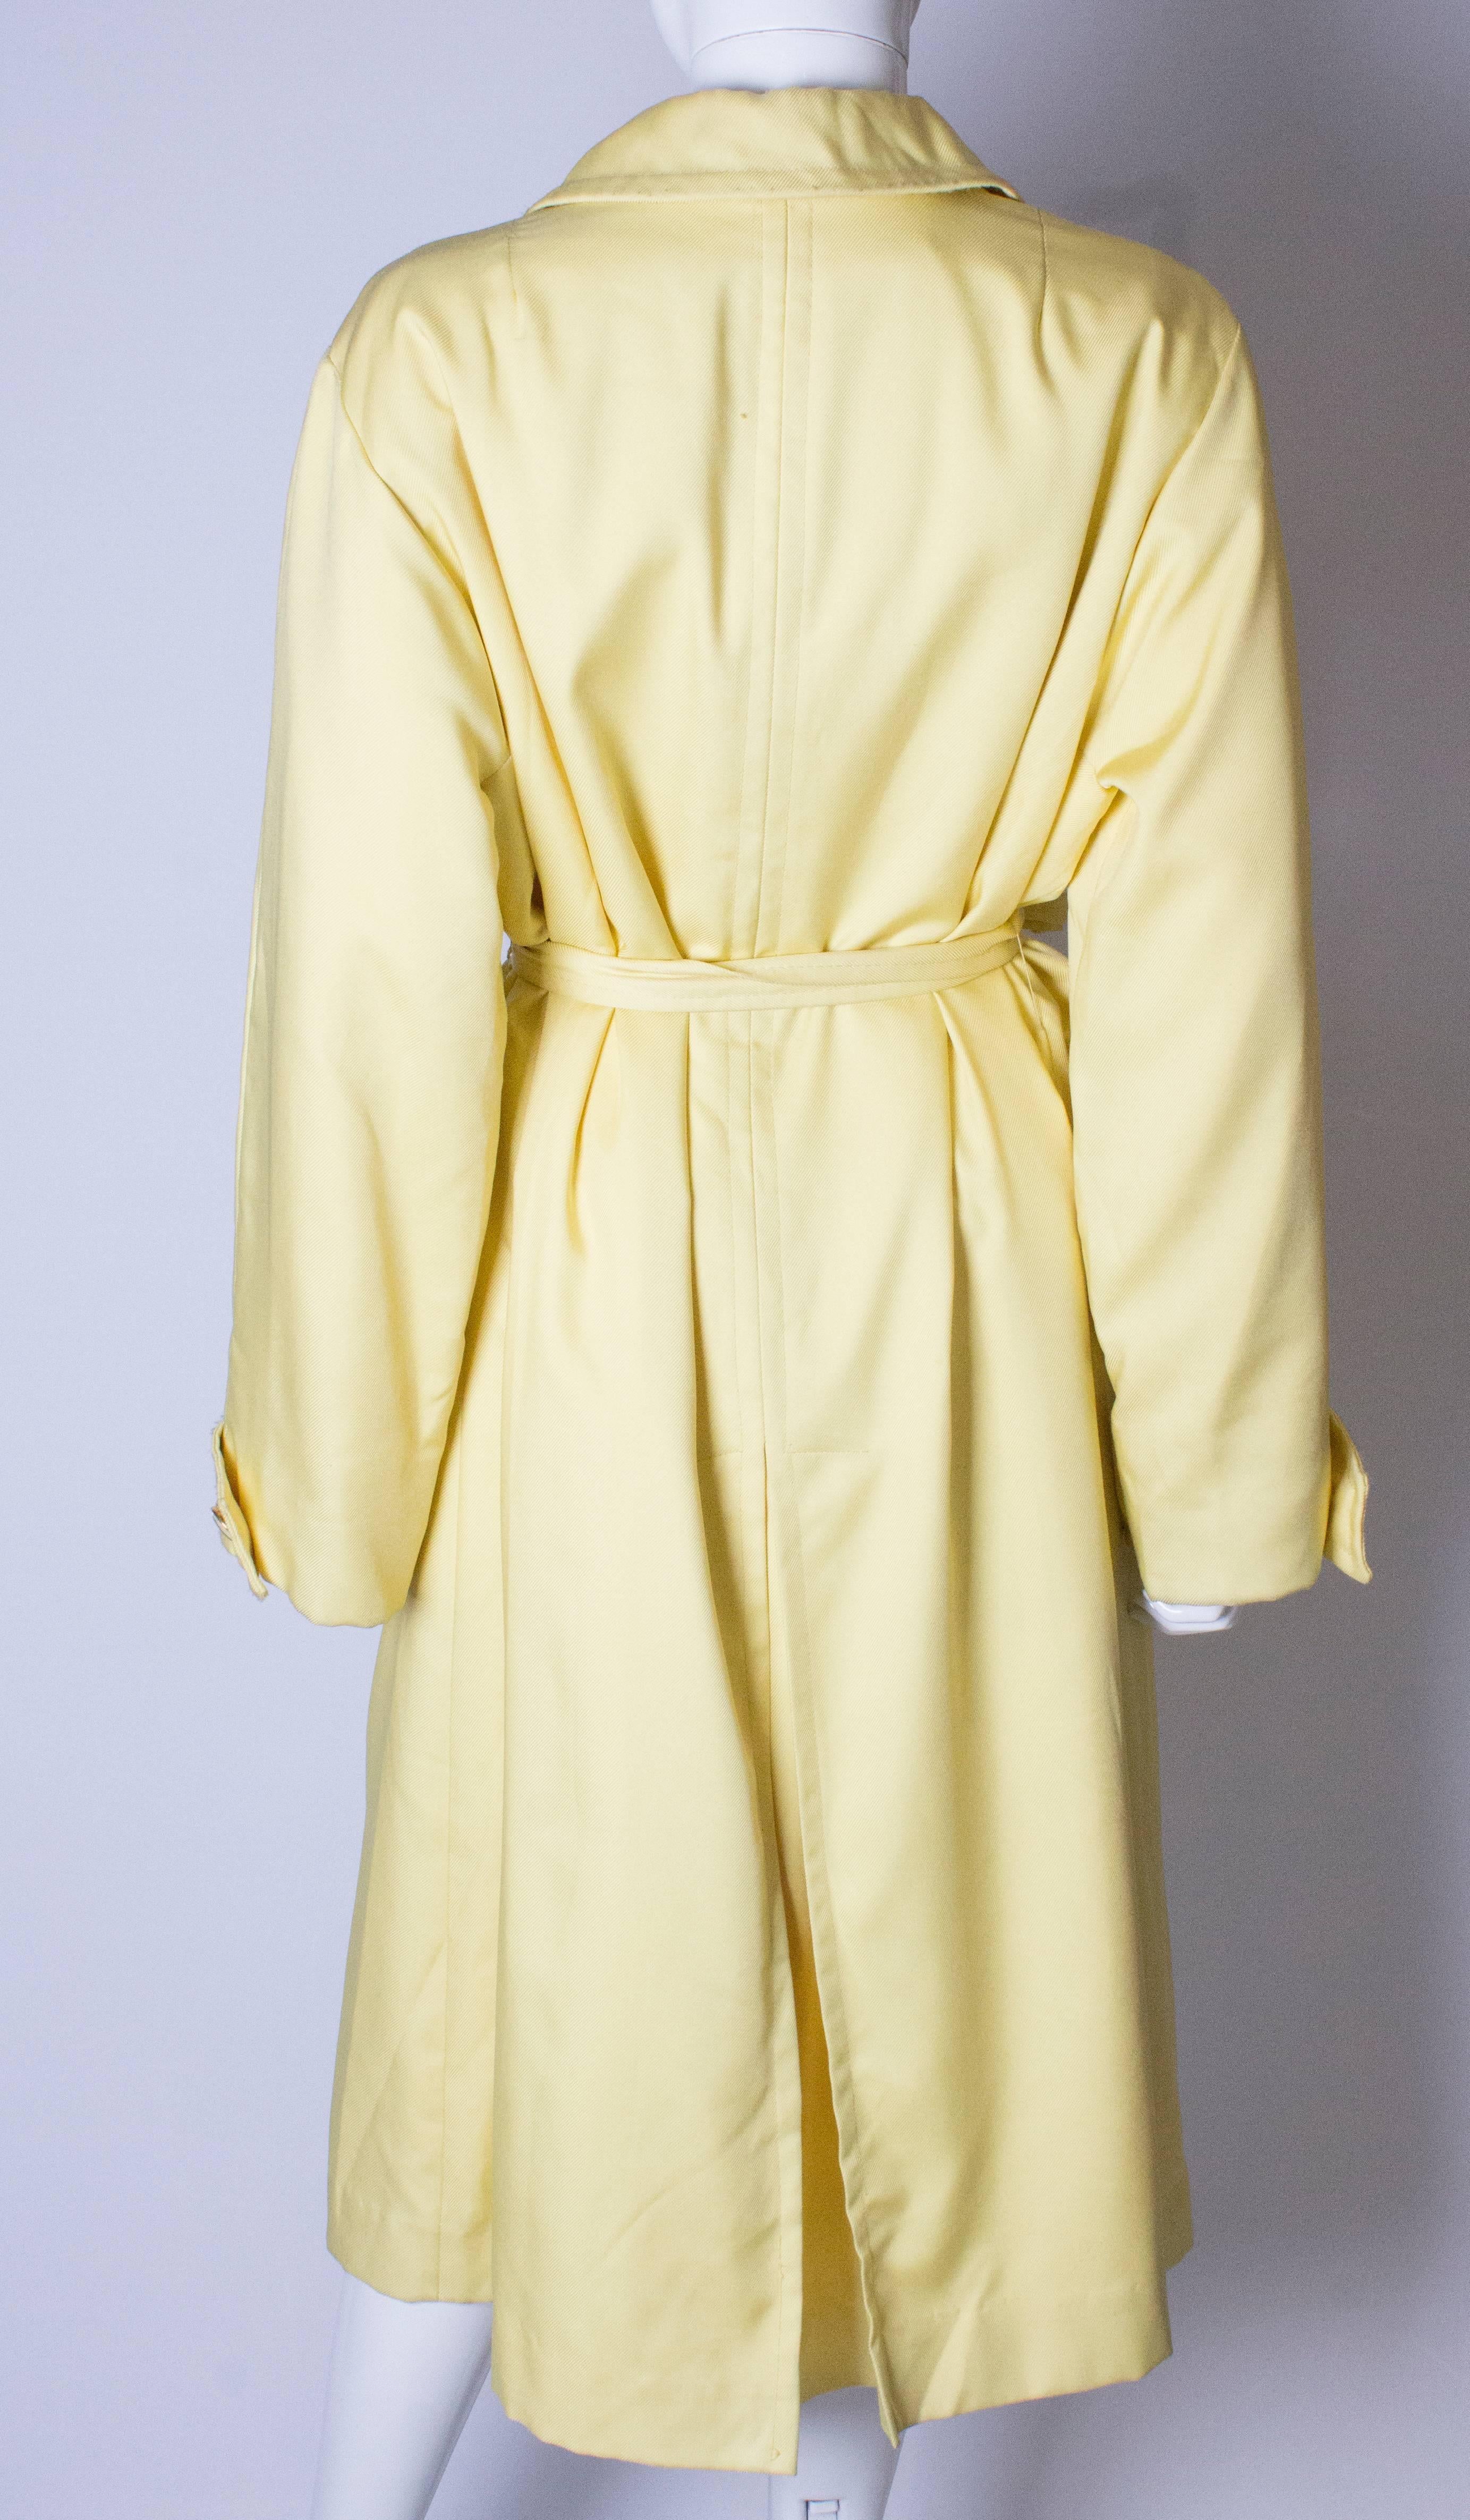  Vintage 1970s Coat, Count Romit for Nieman Marcus  For Sale 3